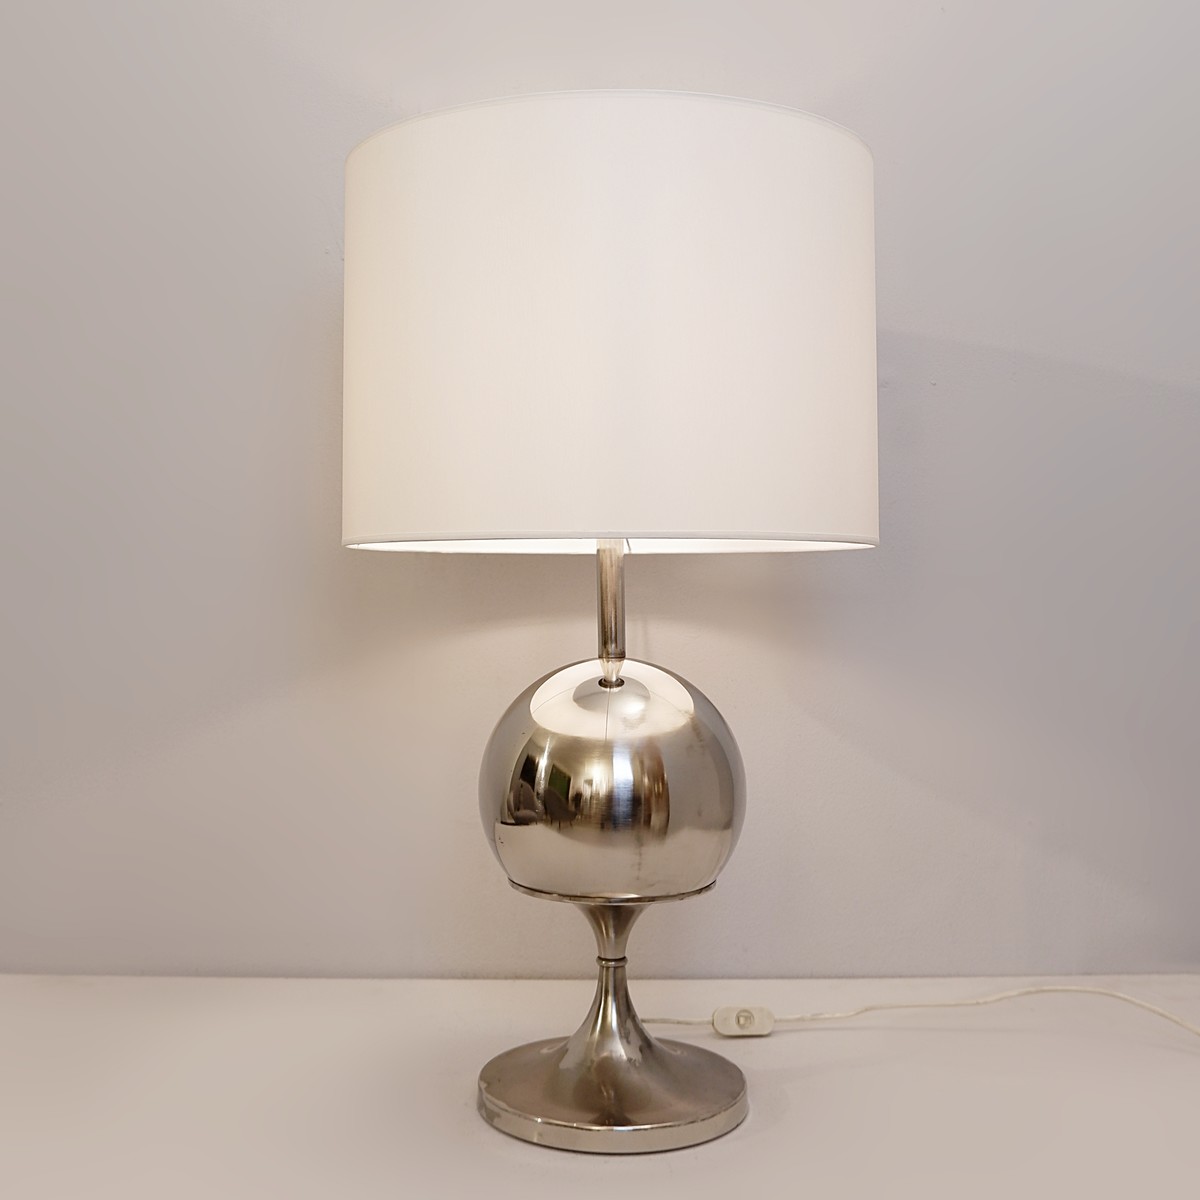 spherical-chrome-table-lamp-1970s-399965